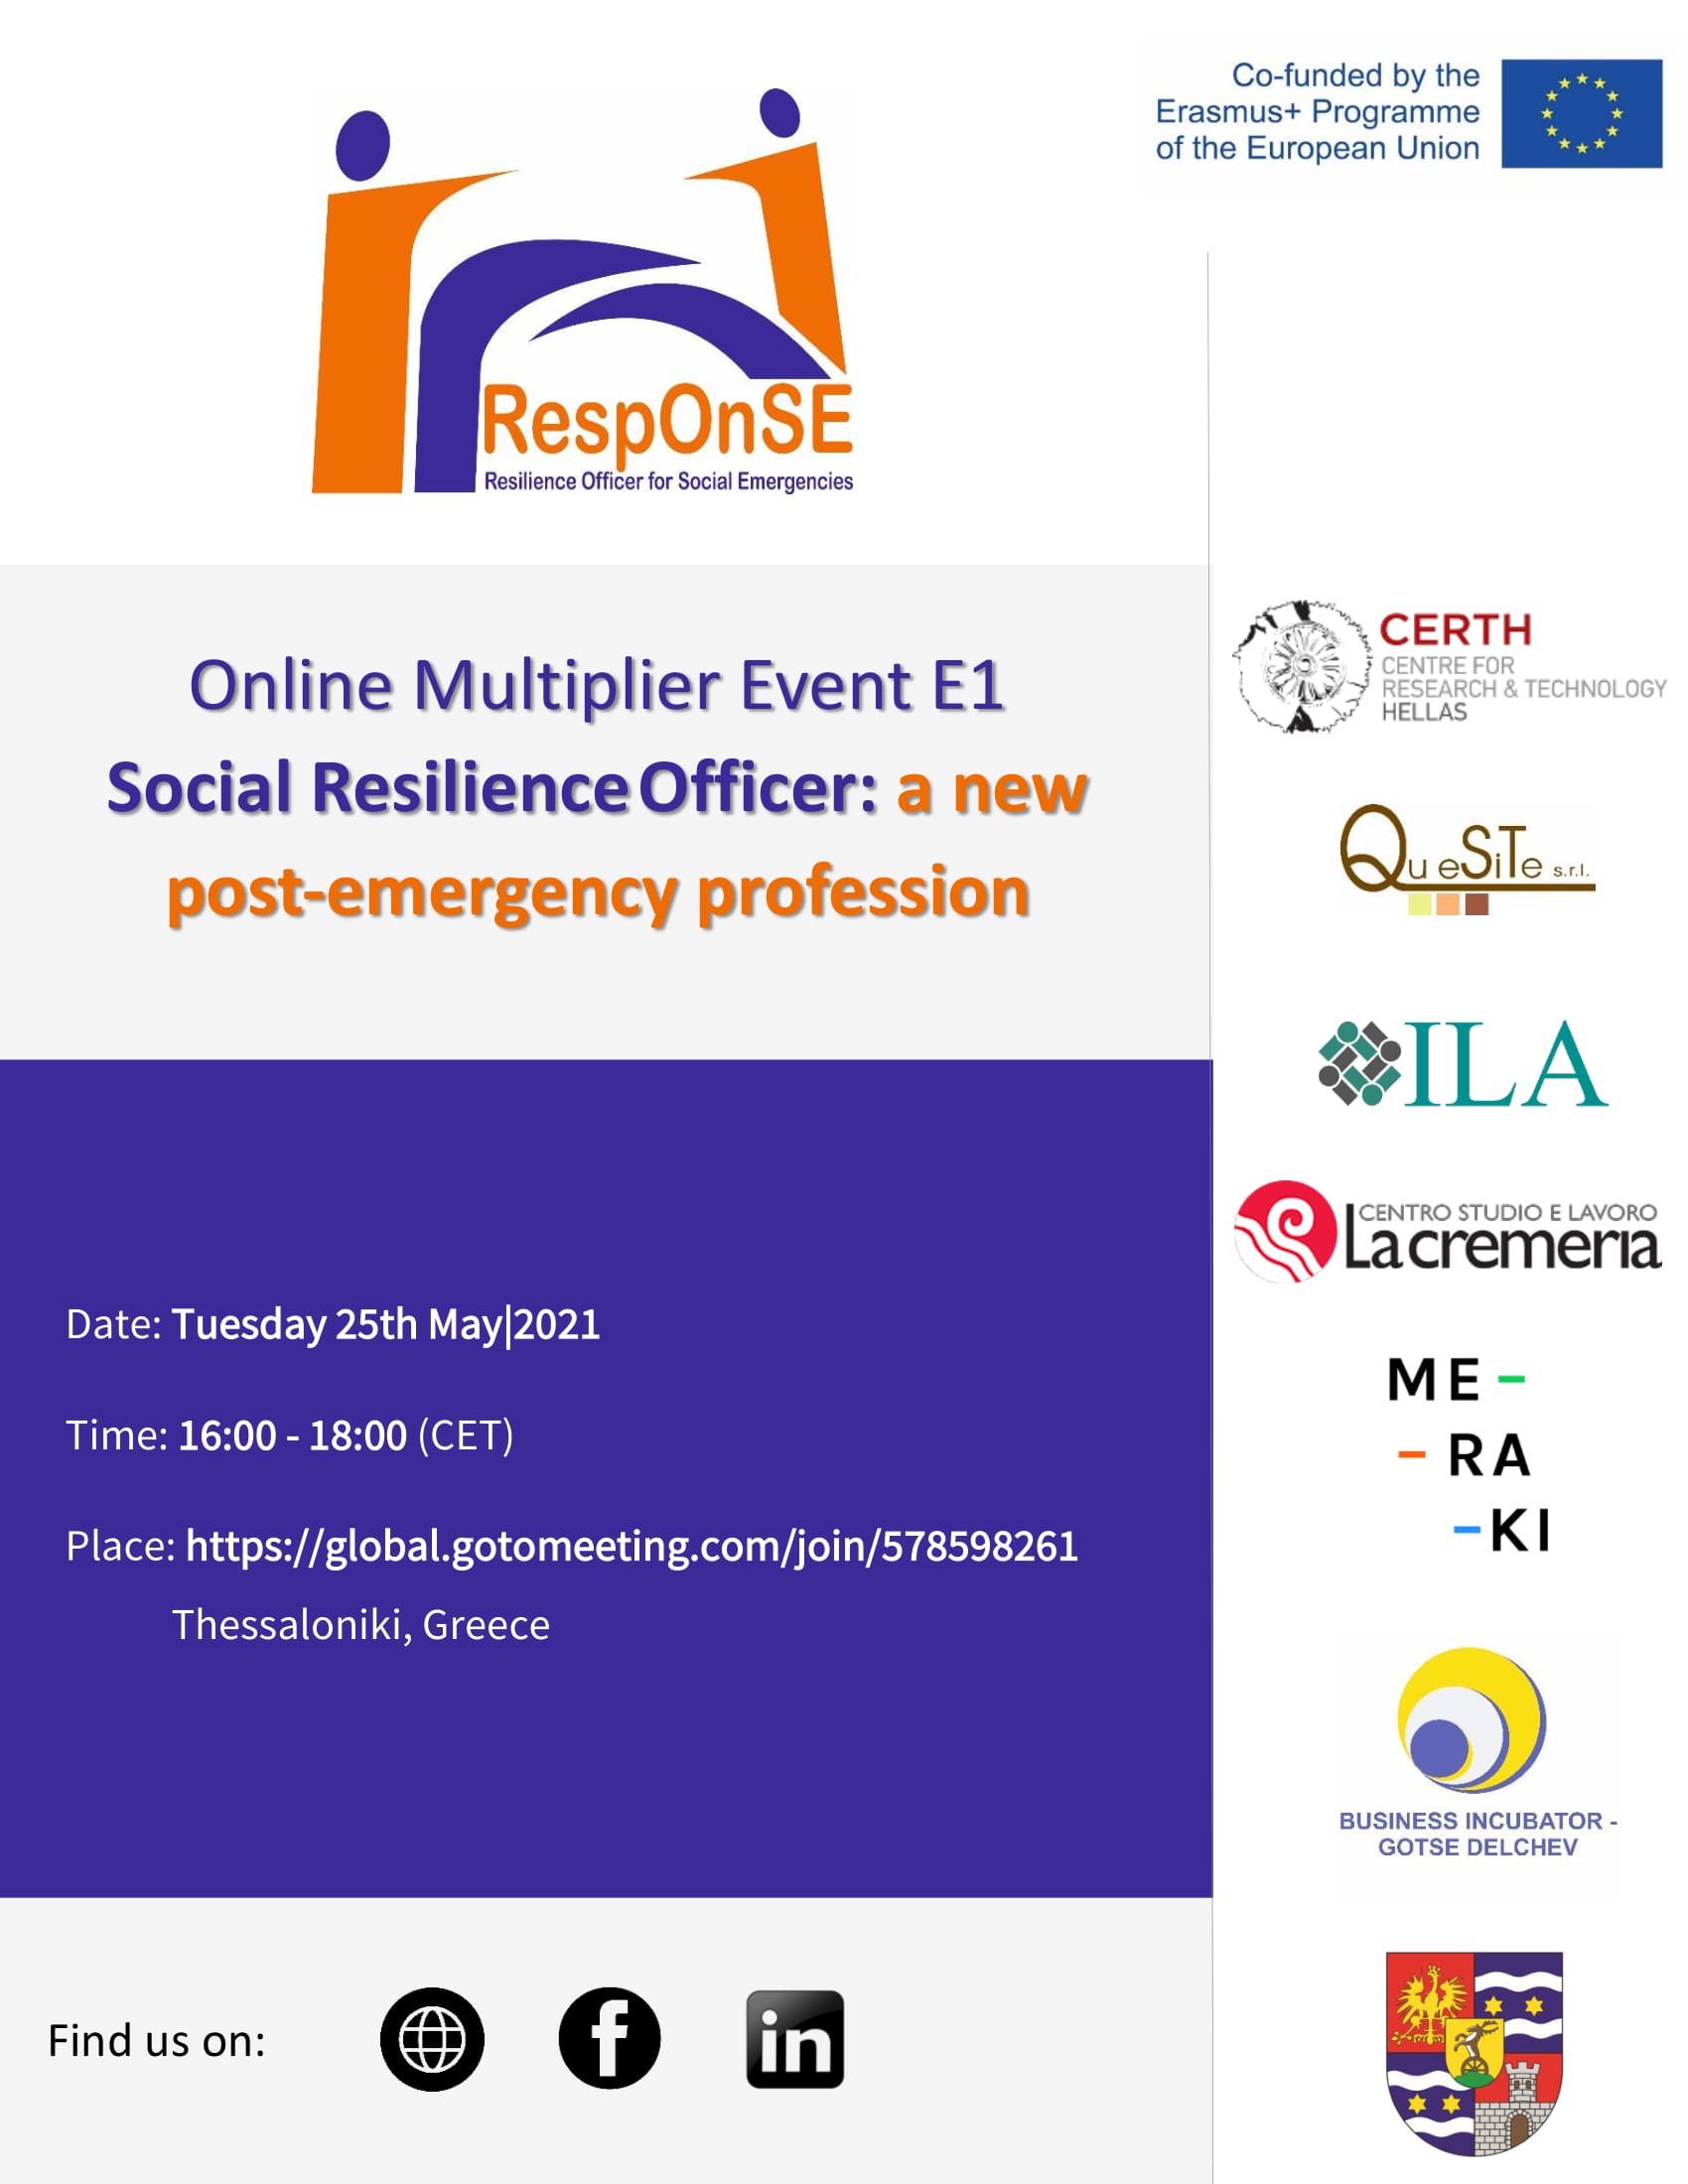  <b> Διαδικτυακή εκδήλωση στα πλαίσια του ερευνητικού έργου "Response: Social Resilience Officer: a new post-emergency profession" </B>